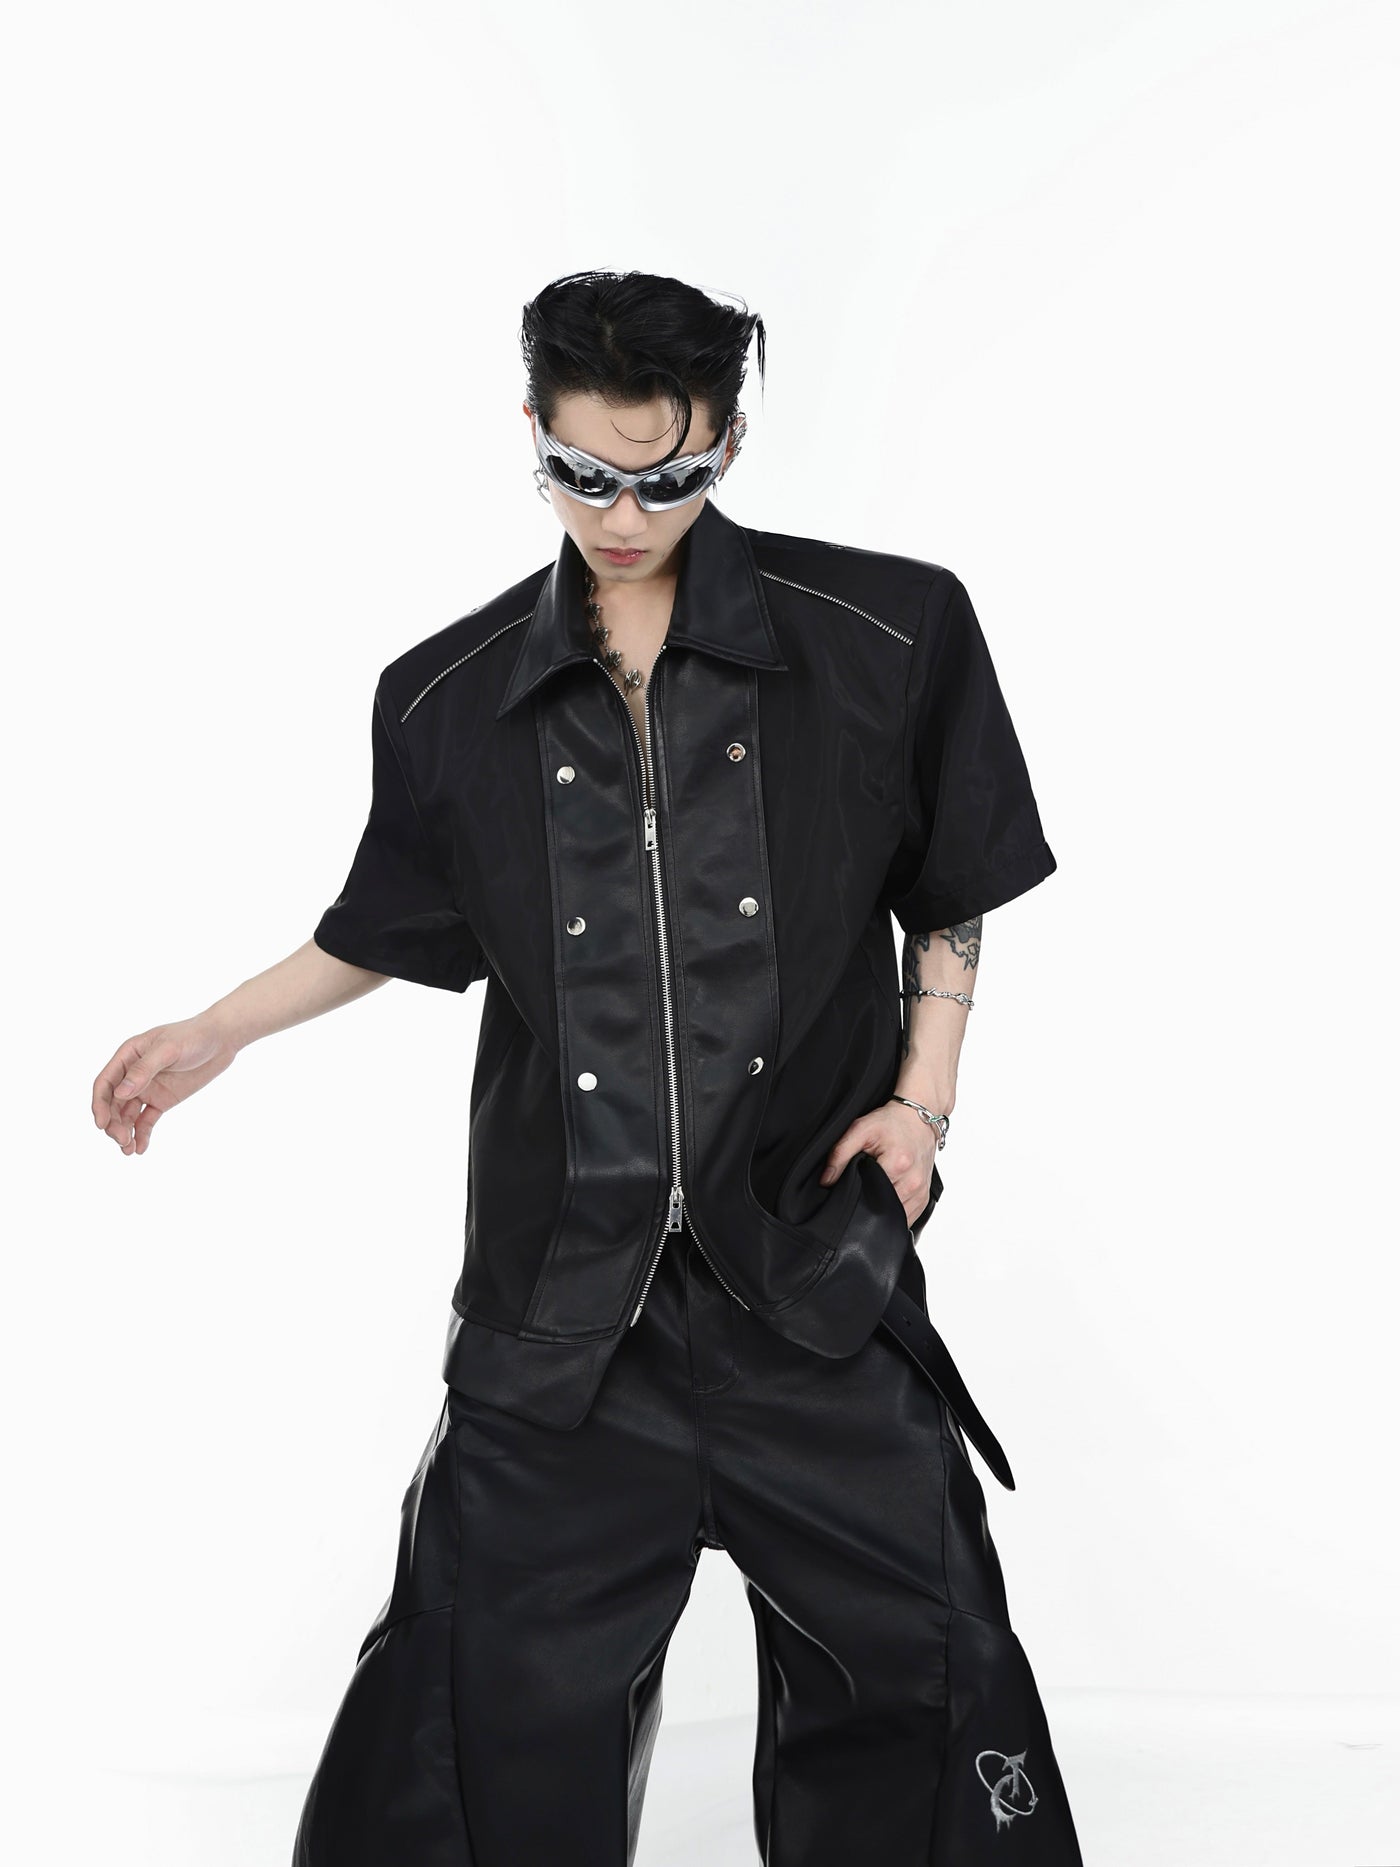 Argue Culture Leather Stitched Metal Buttoned Shirt Korean Street Fashion Shirt By Argue Culture Shop Online at OH Vault